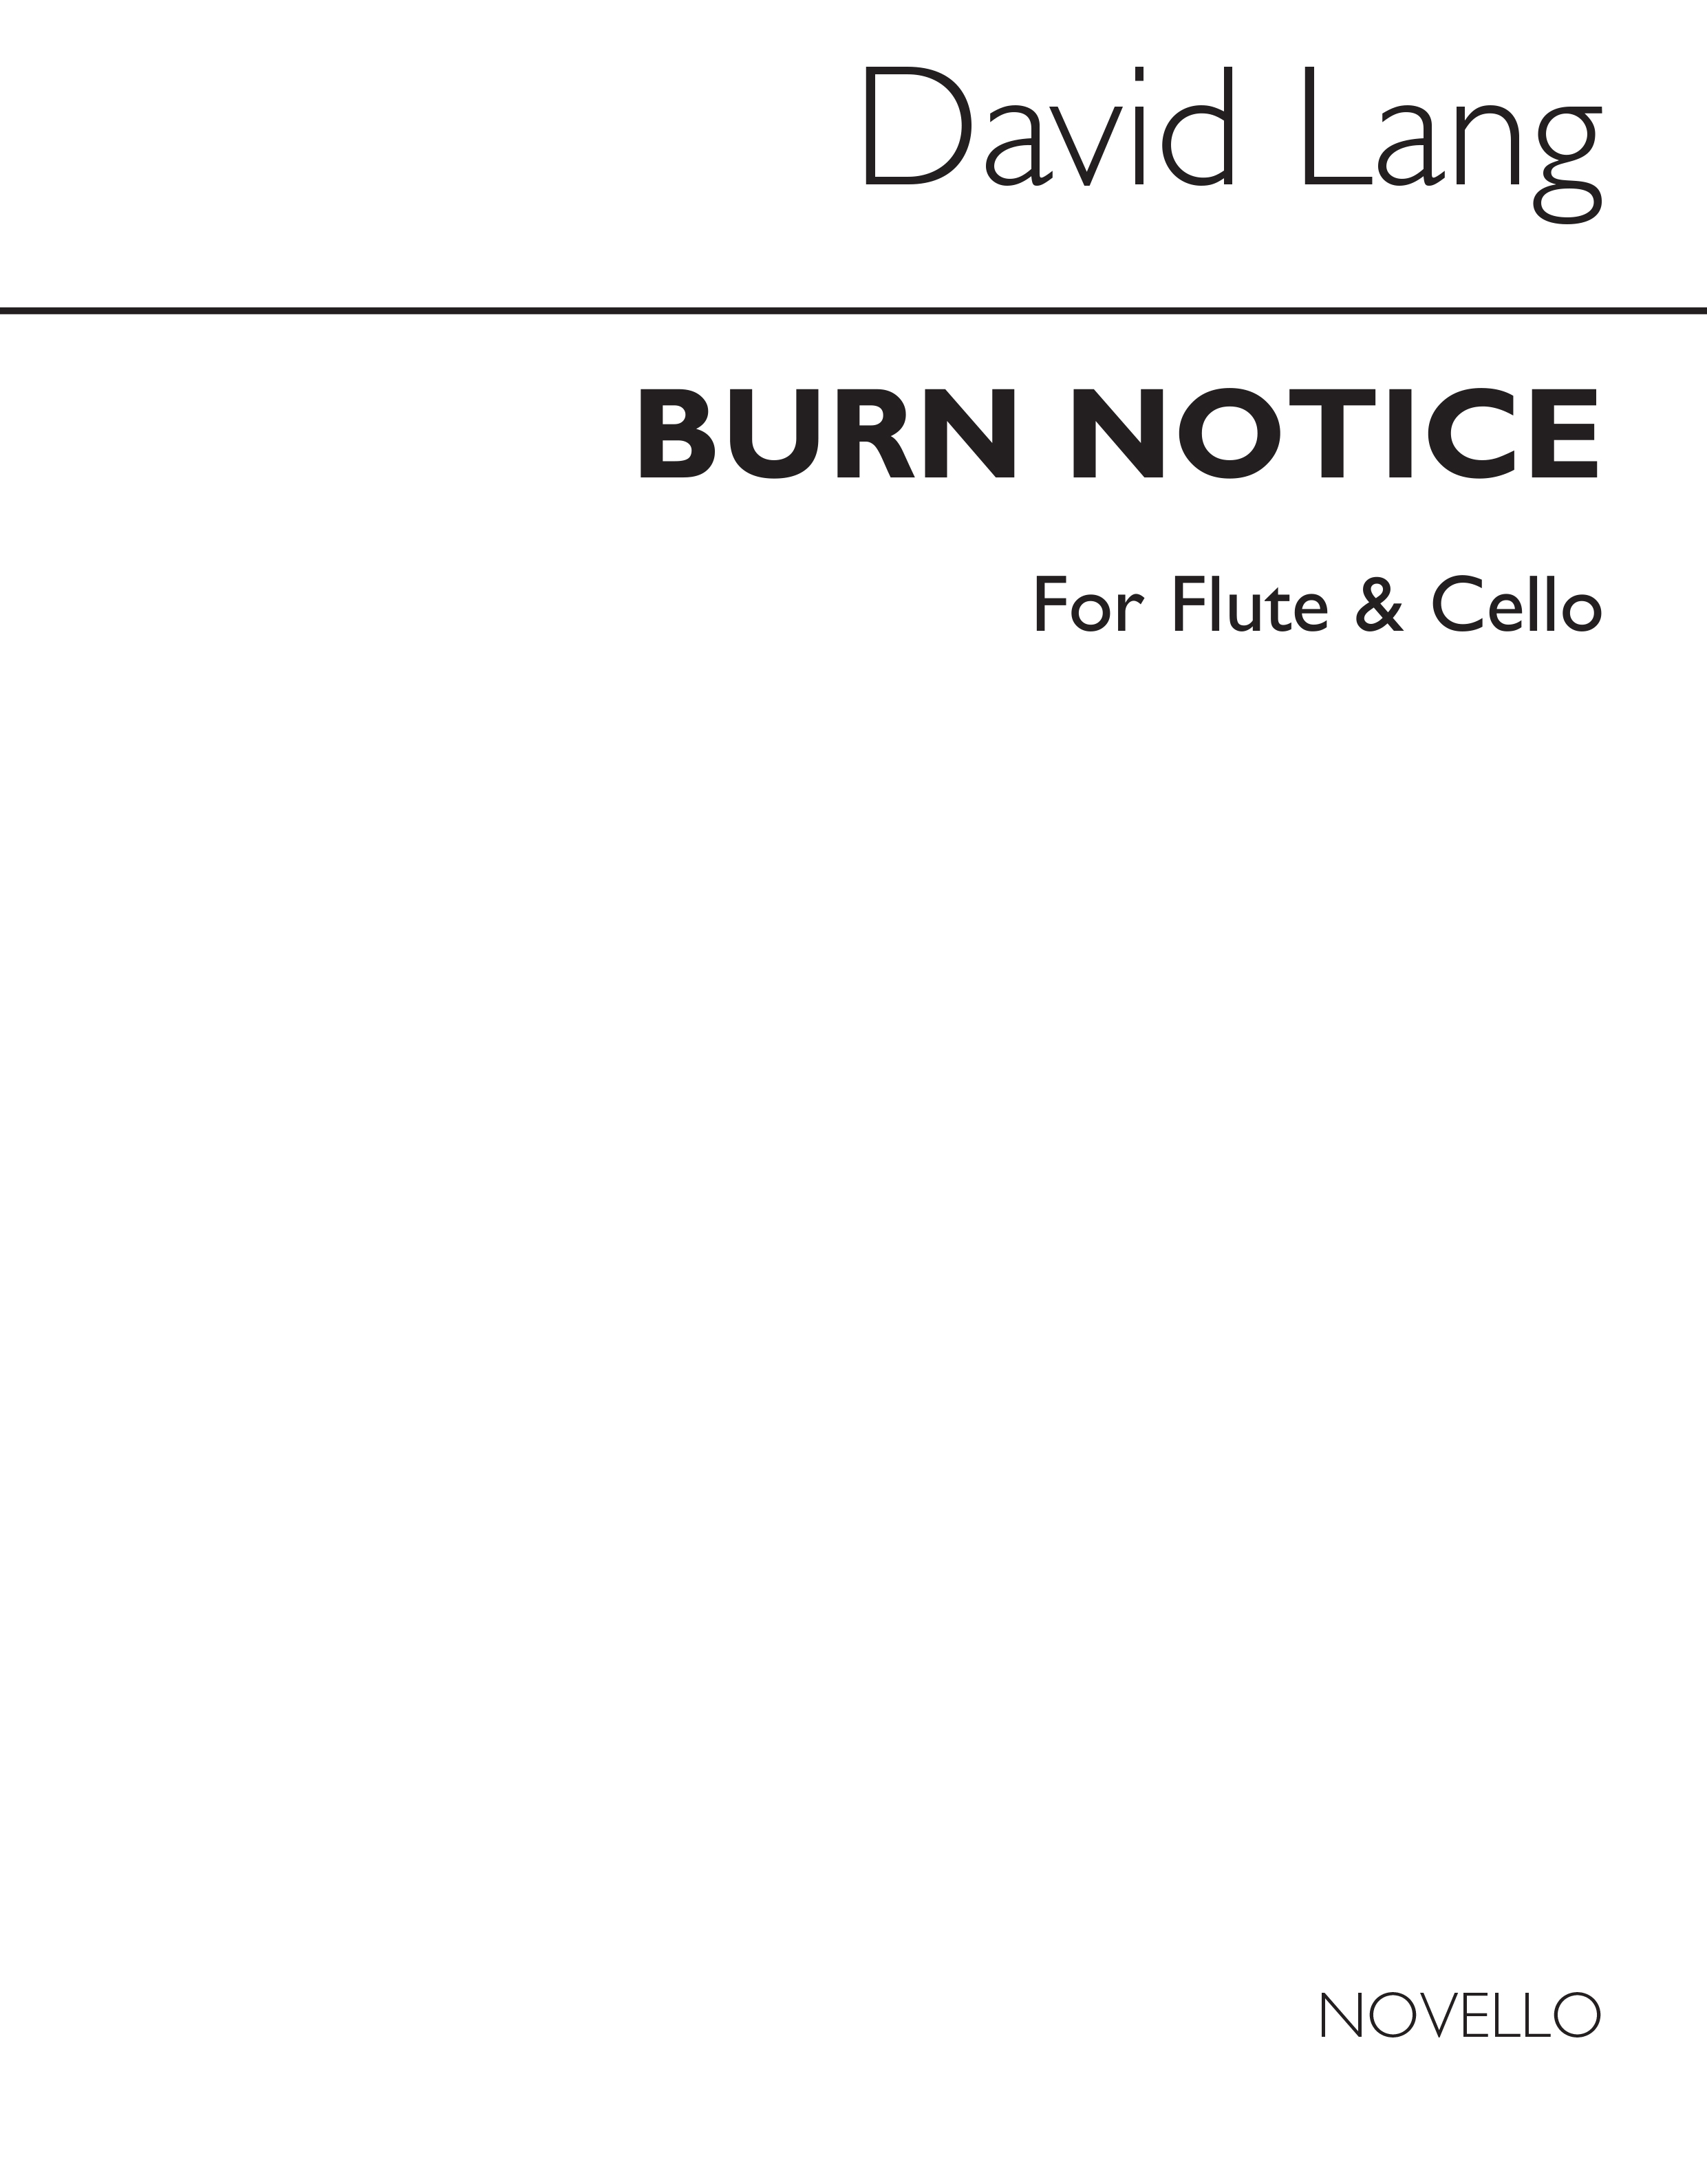 David Lang: Burn Notice (Flute & Cello Parts)